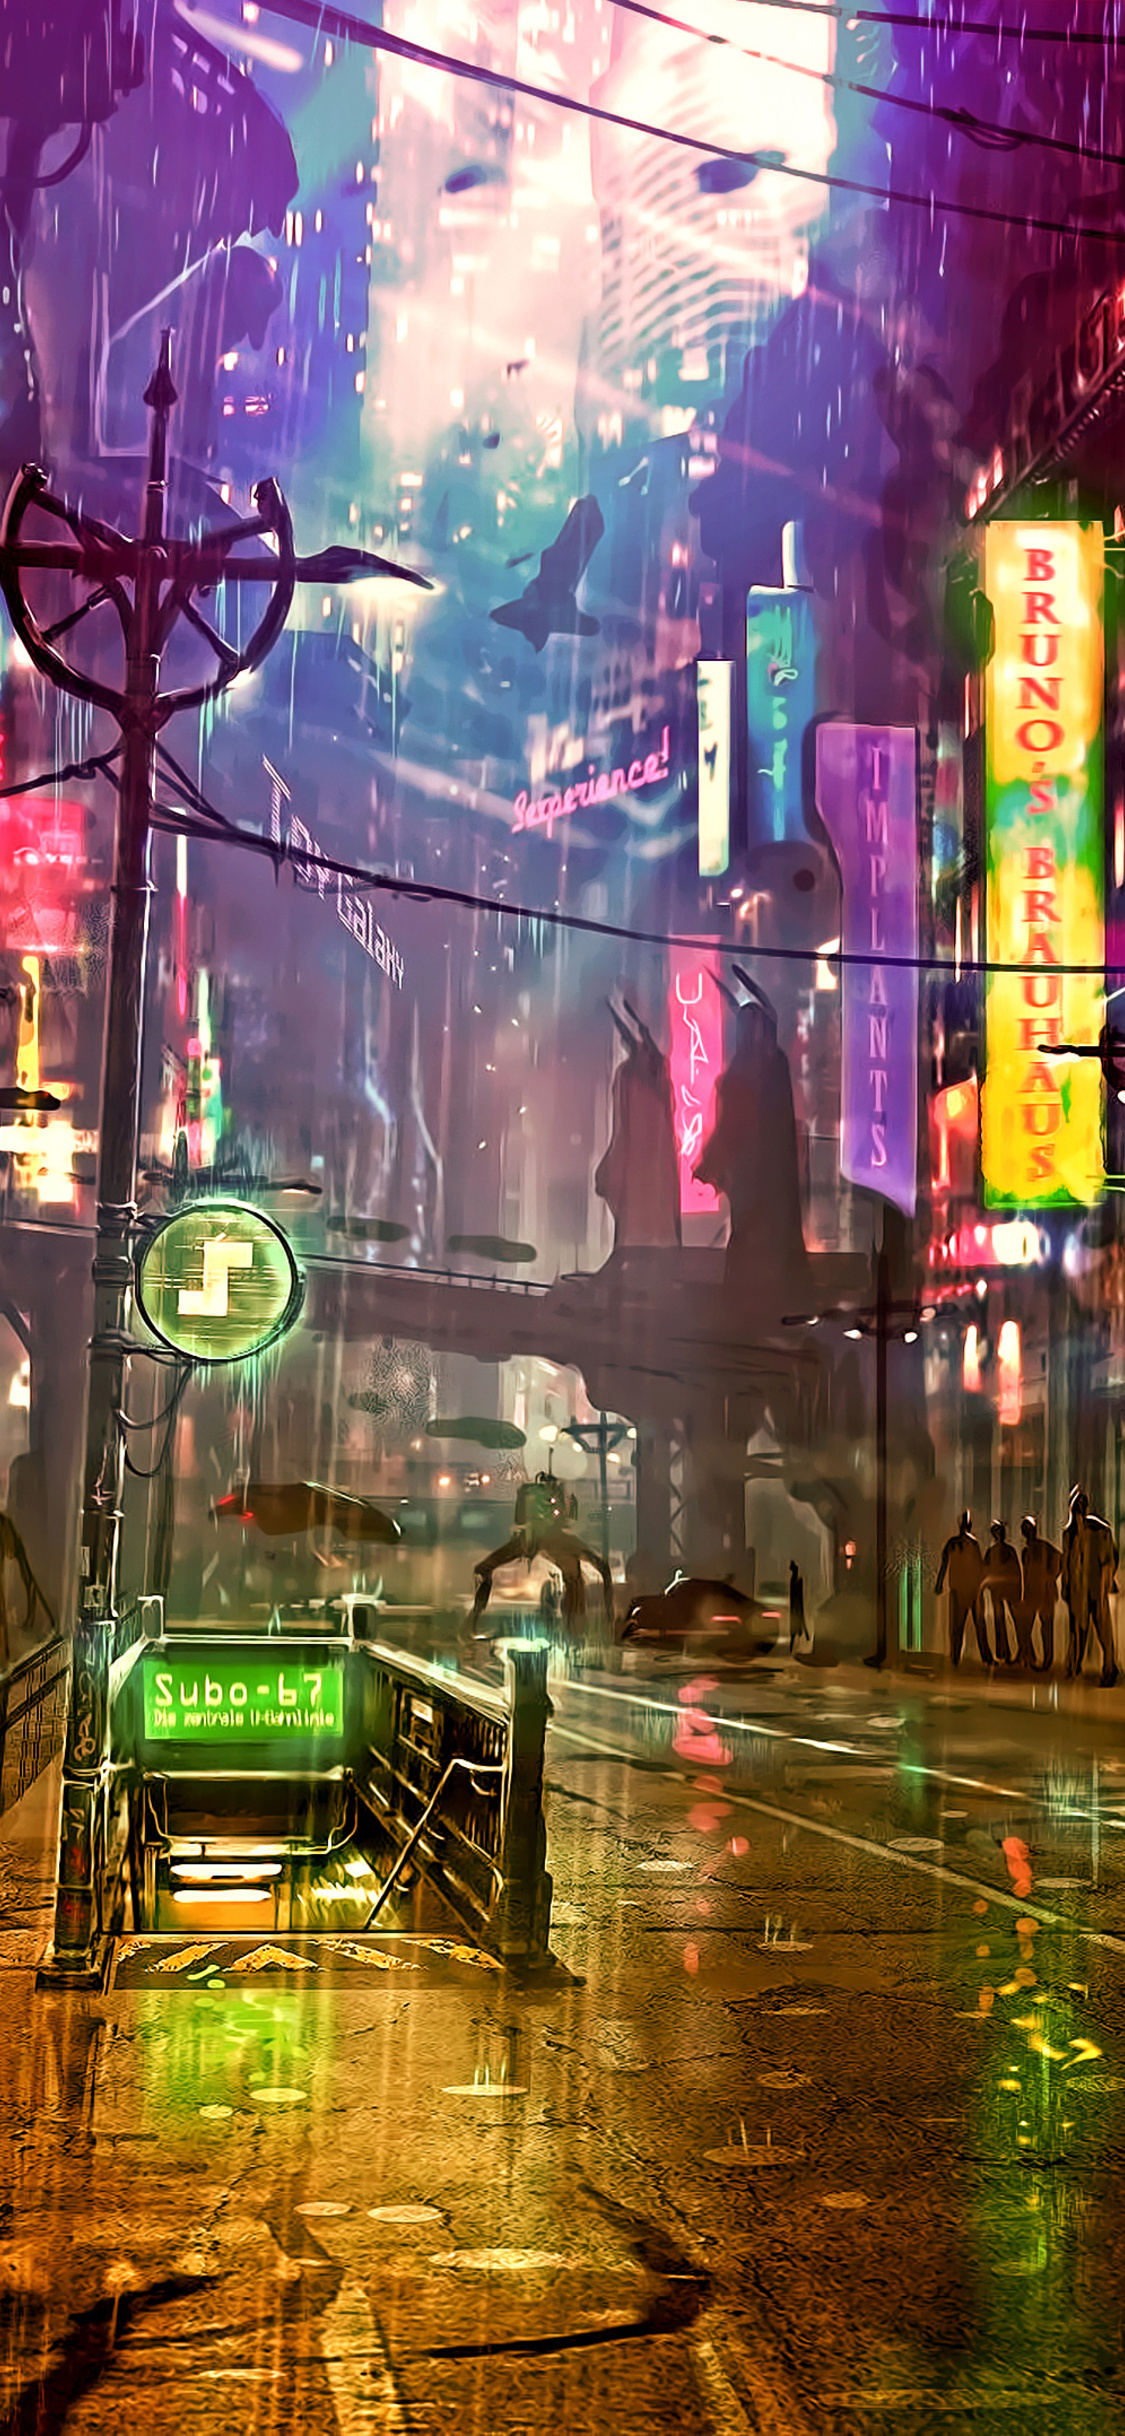 Download Girl On Road Cyberpunk iPhone X Wallpaper